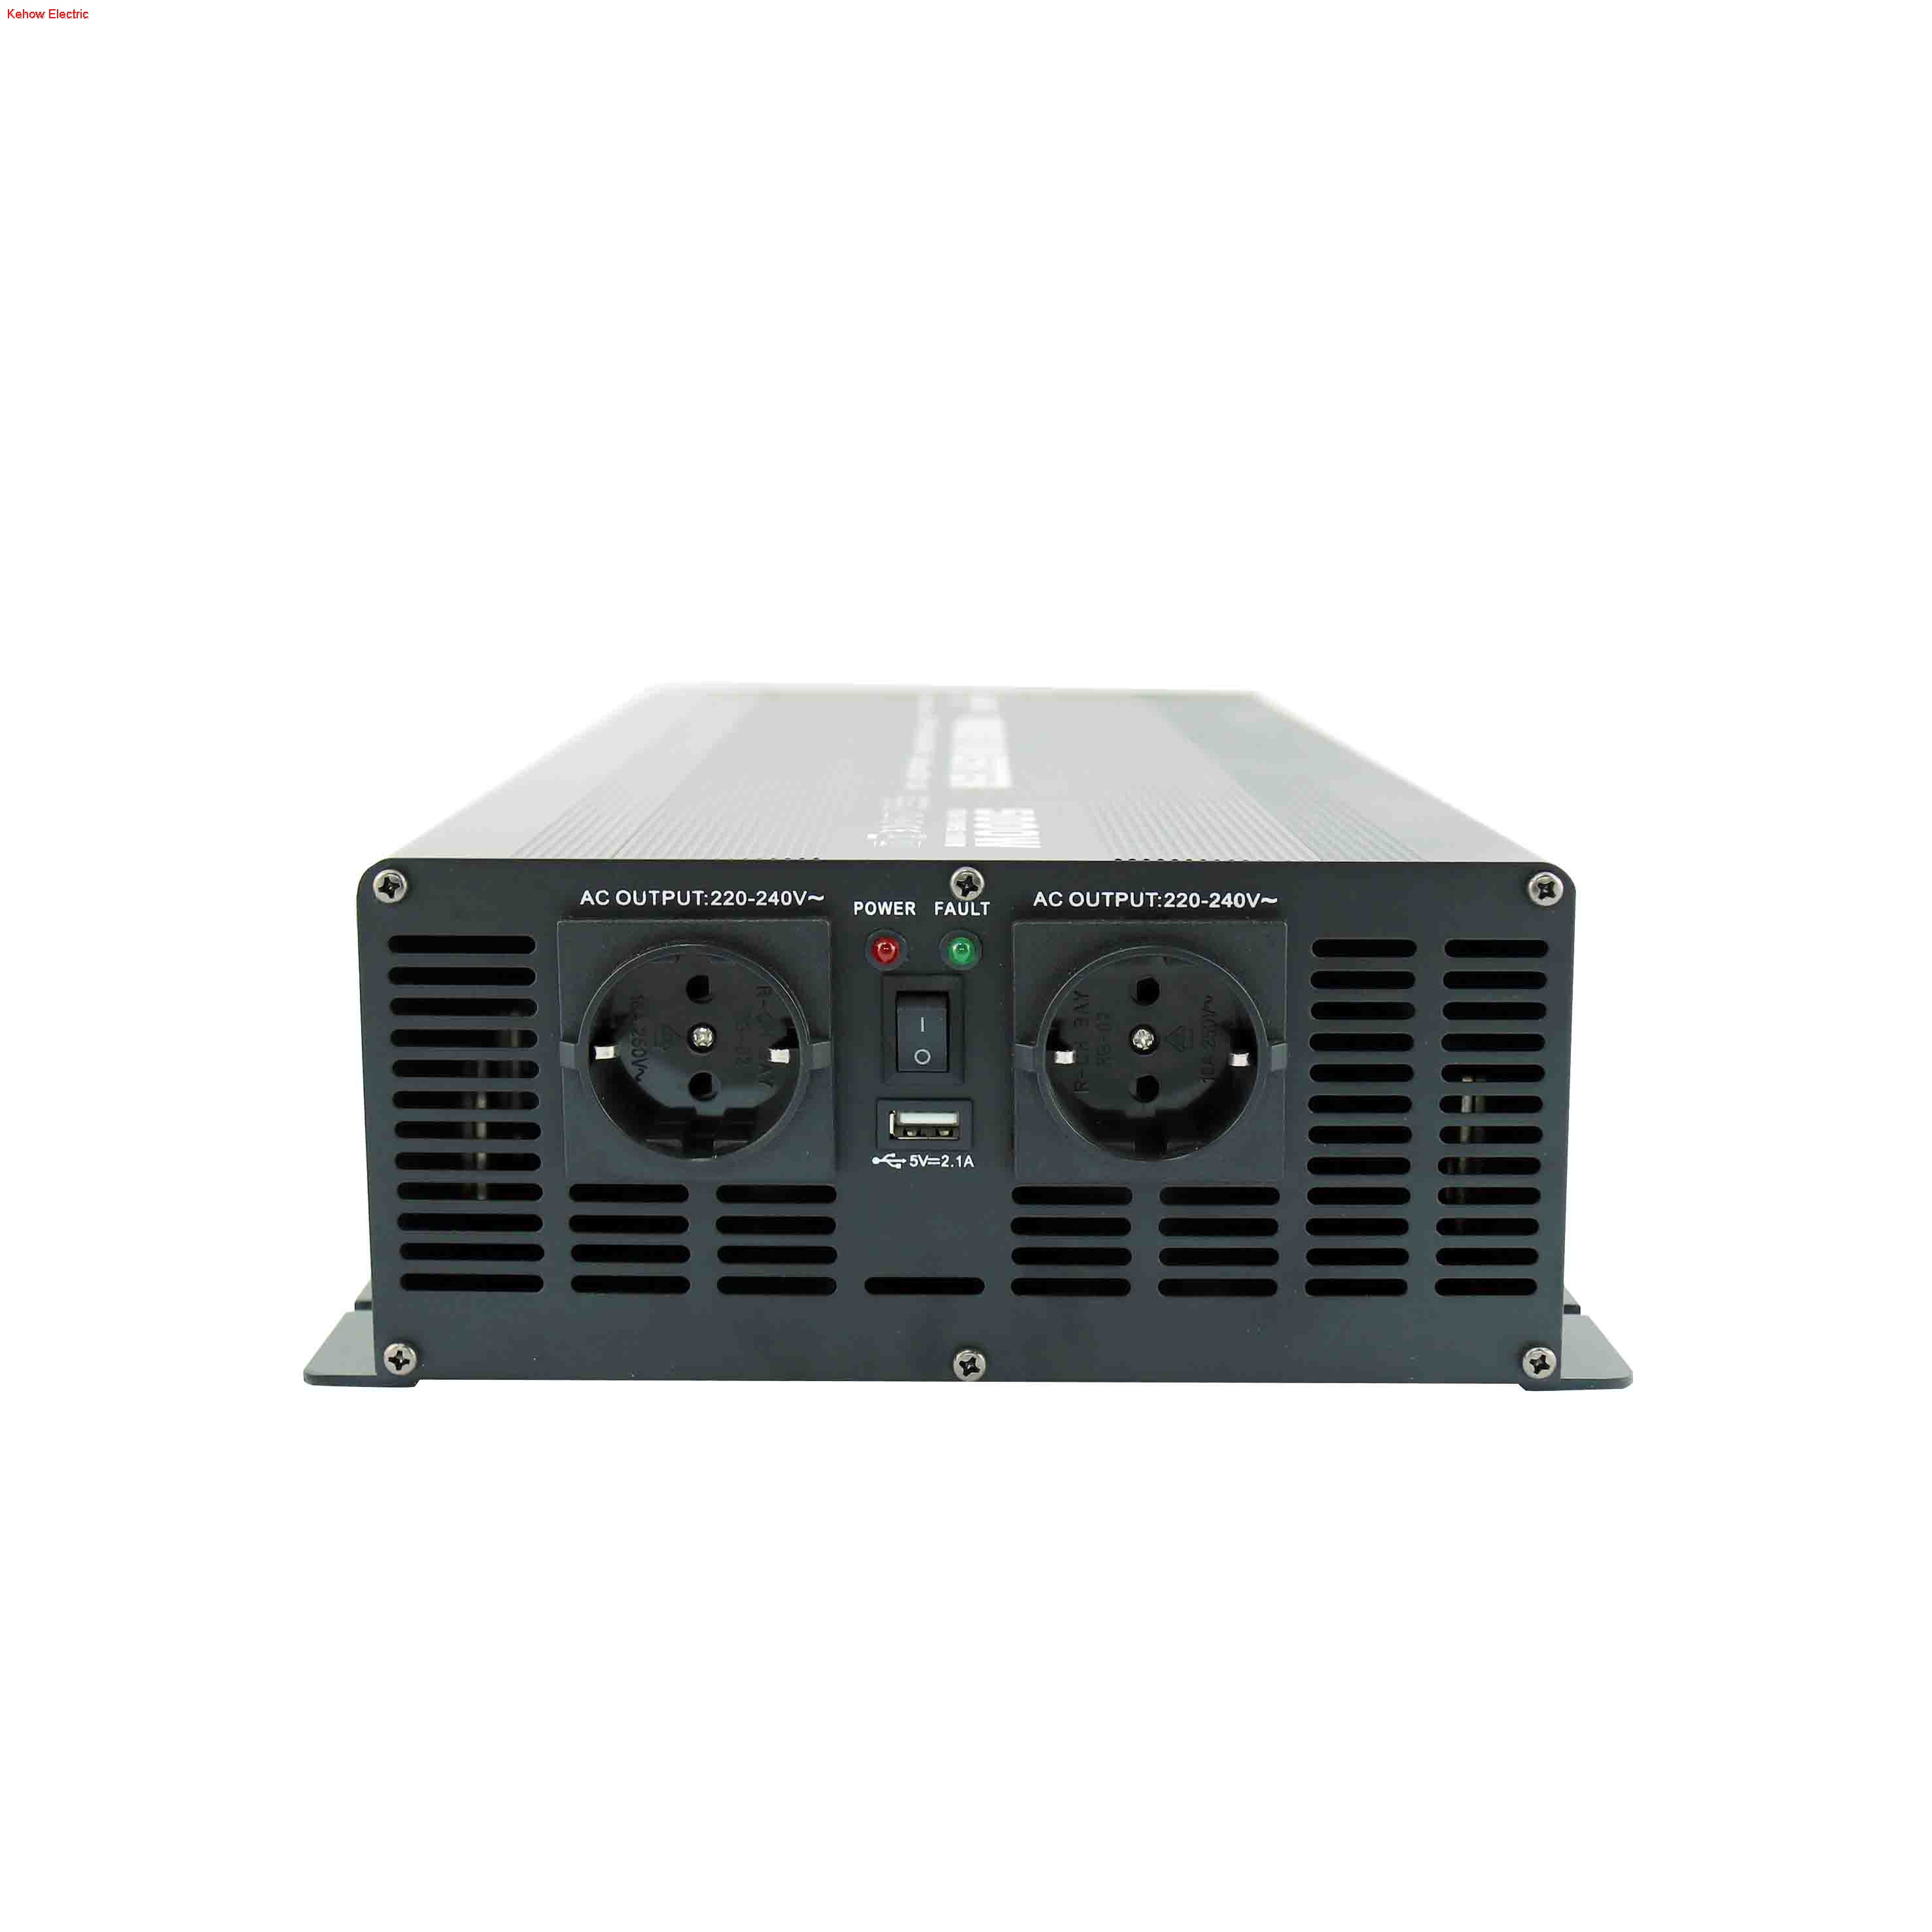 5000W DC to AC Modified Sine Wave Power Inverter